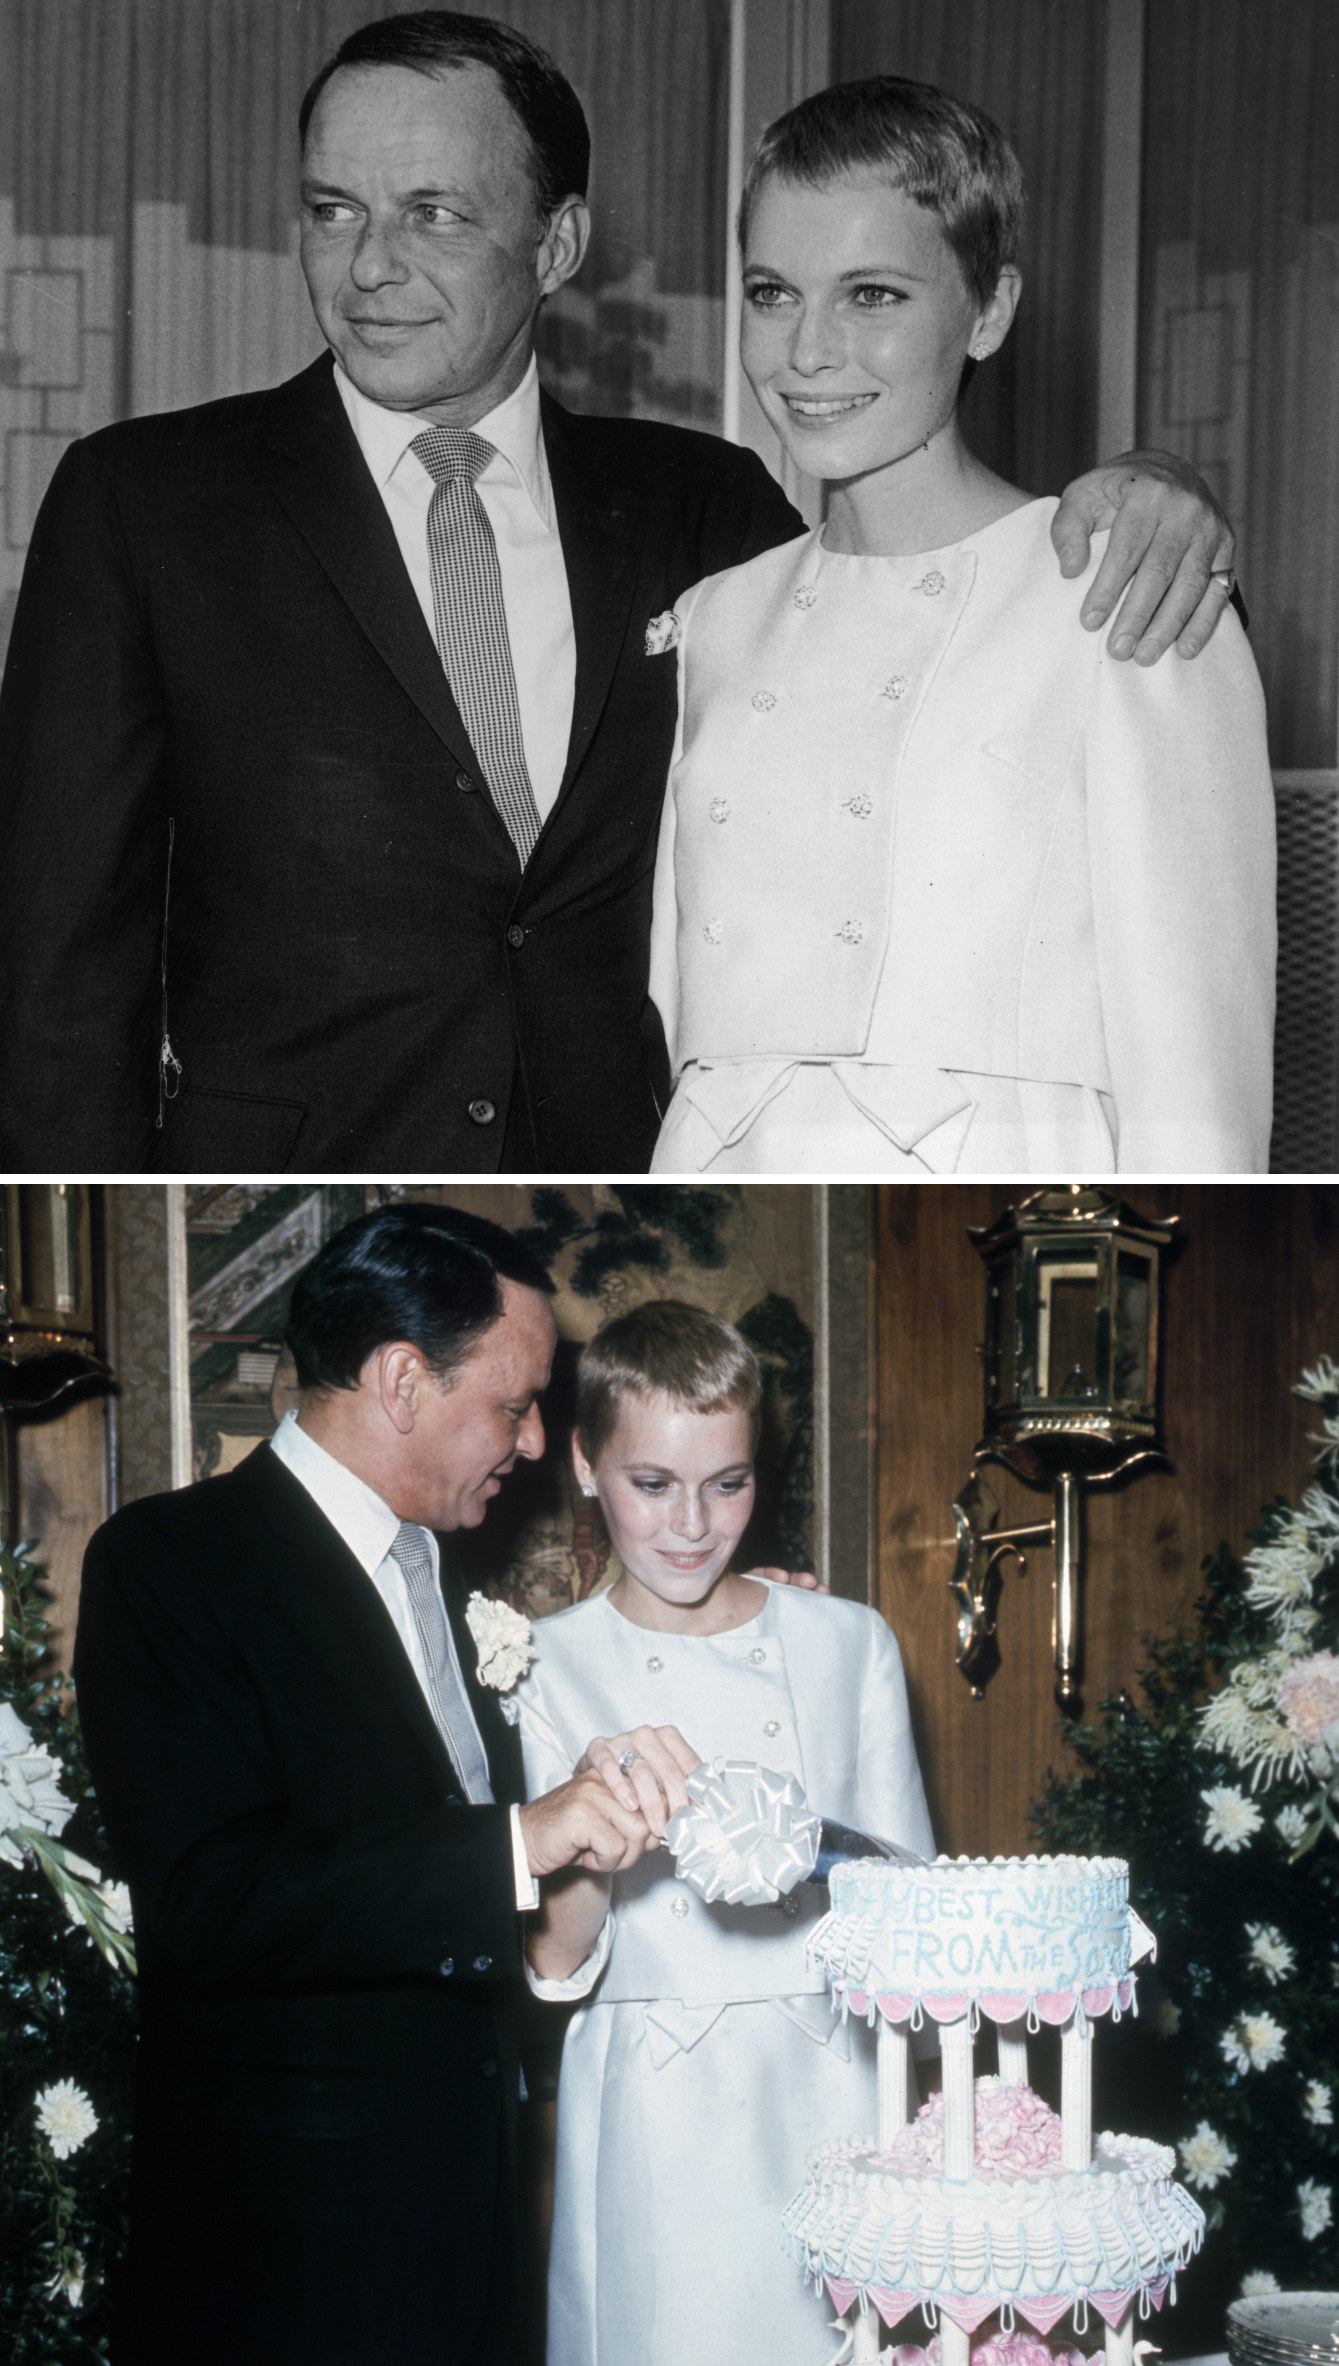 Farrow and Sinatra on their wedding day in 1966, cutting cake